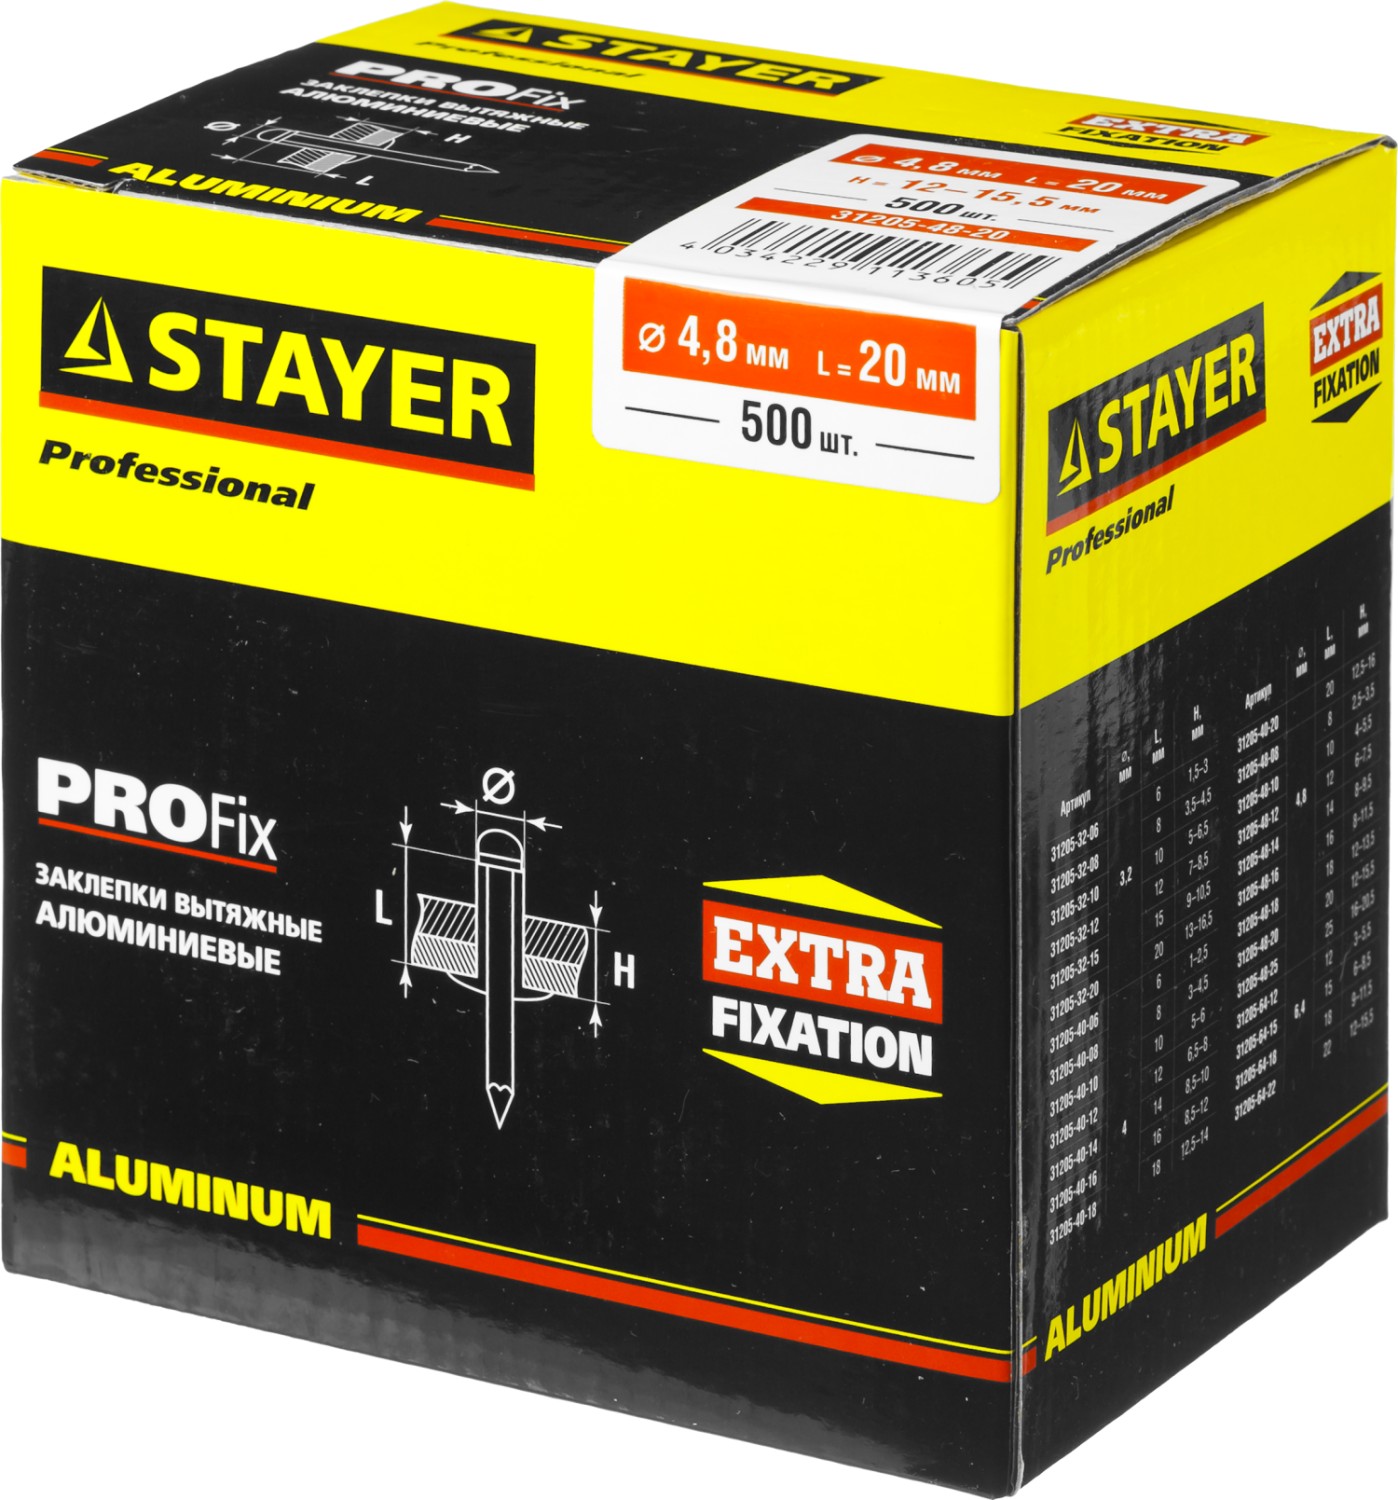 STAYER Pro-FIX, 4.8 х 20 мм, 500 шт, алюминиевые заклепки, Professional (31205-48-20)